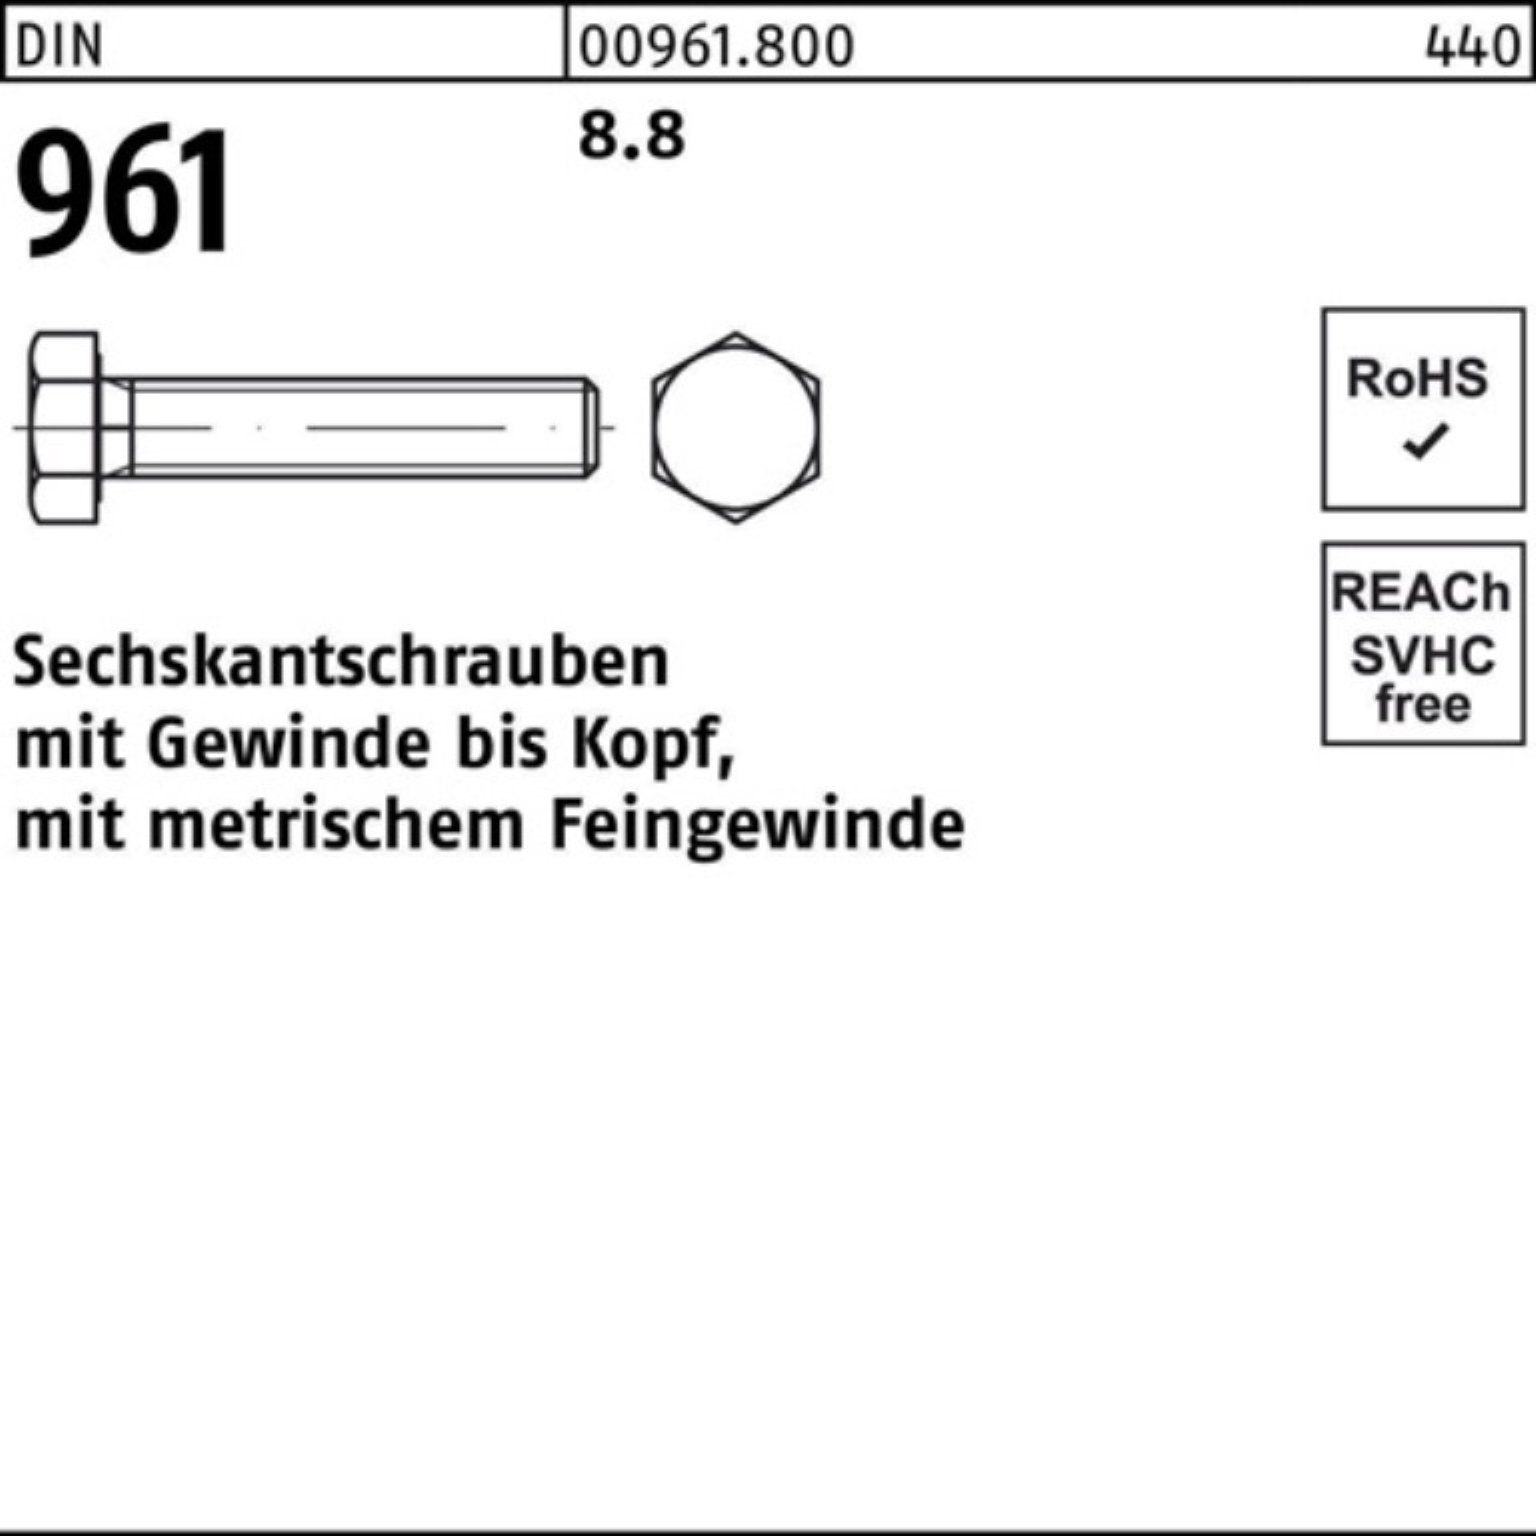 Reyher Sechskantschraube 100er Pack Sechskantschraube 35 DIN 100 Stück DI VG 961 M12x1,25x 8.8